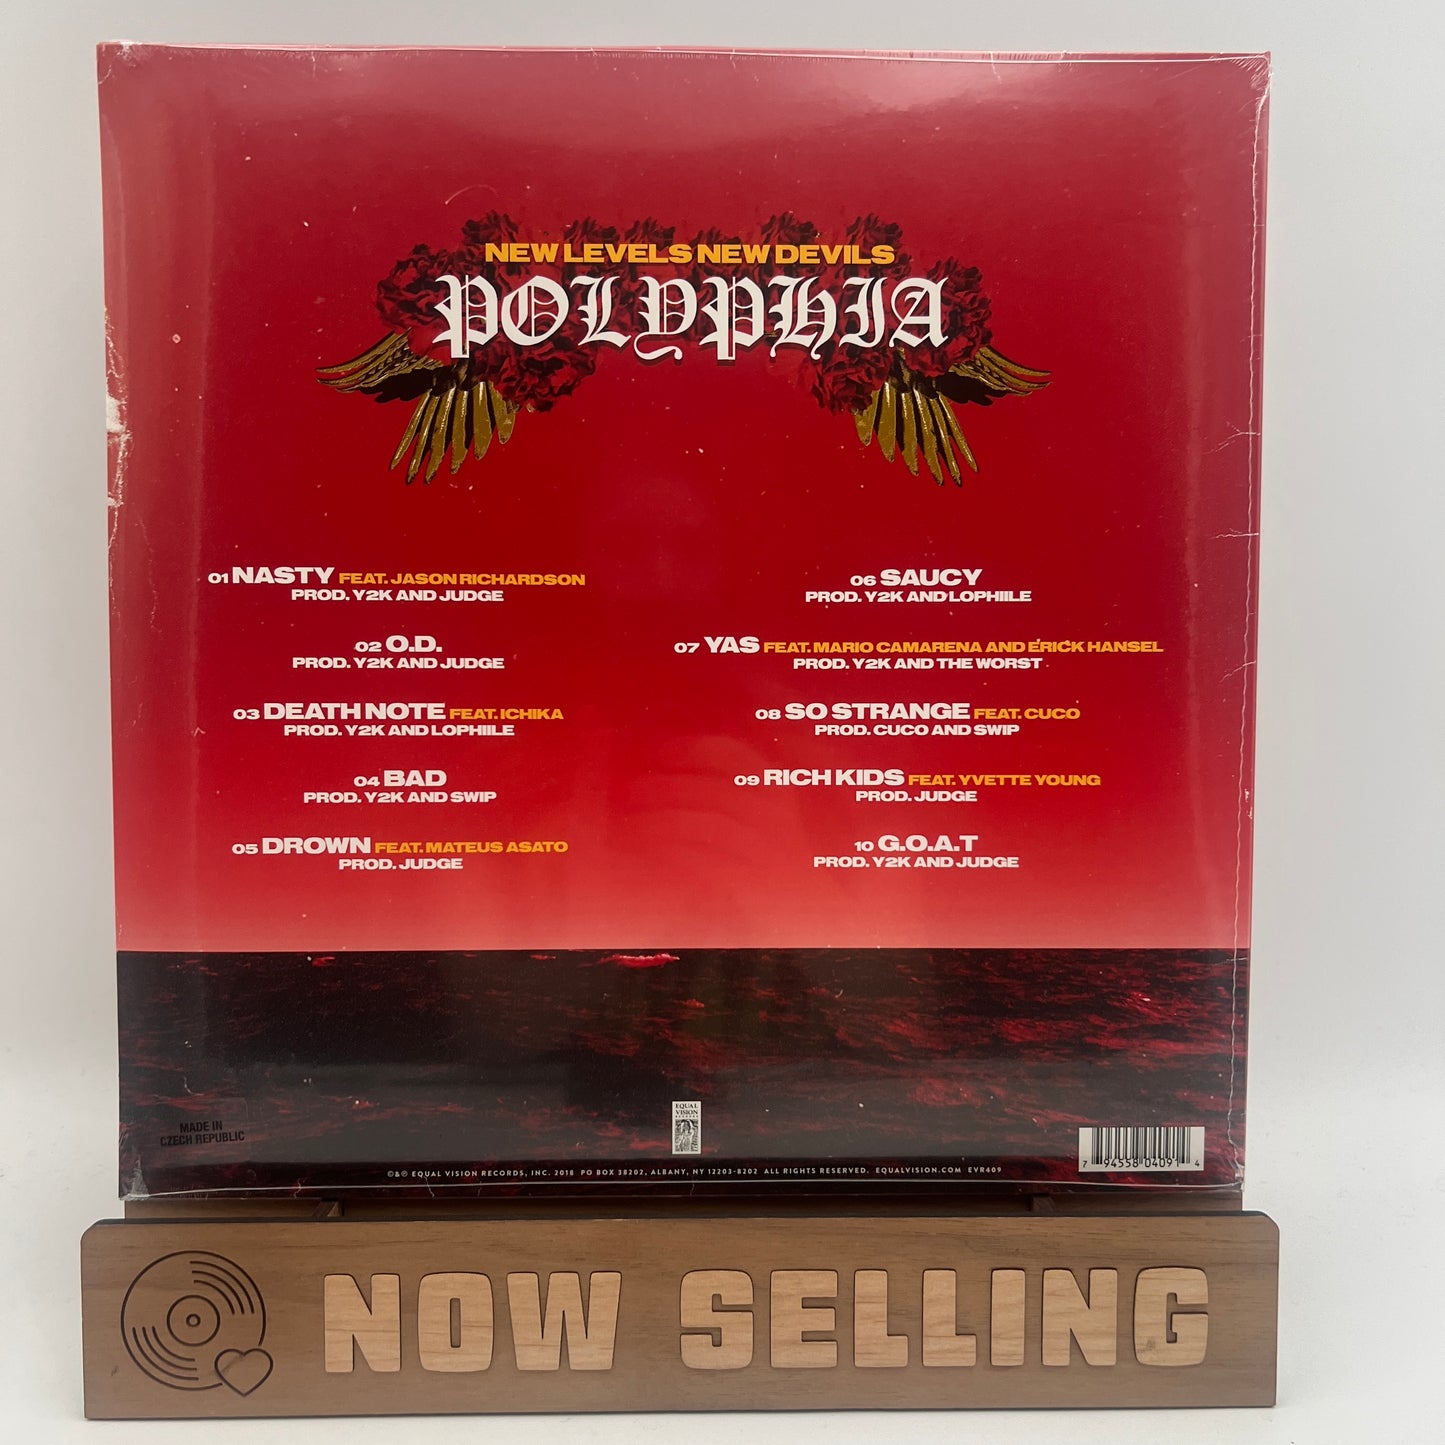 Polyphia - New Levels New Devils Vinyl LP Red w/ White Petal SEALED